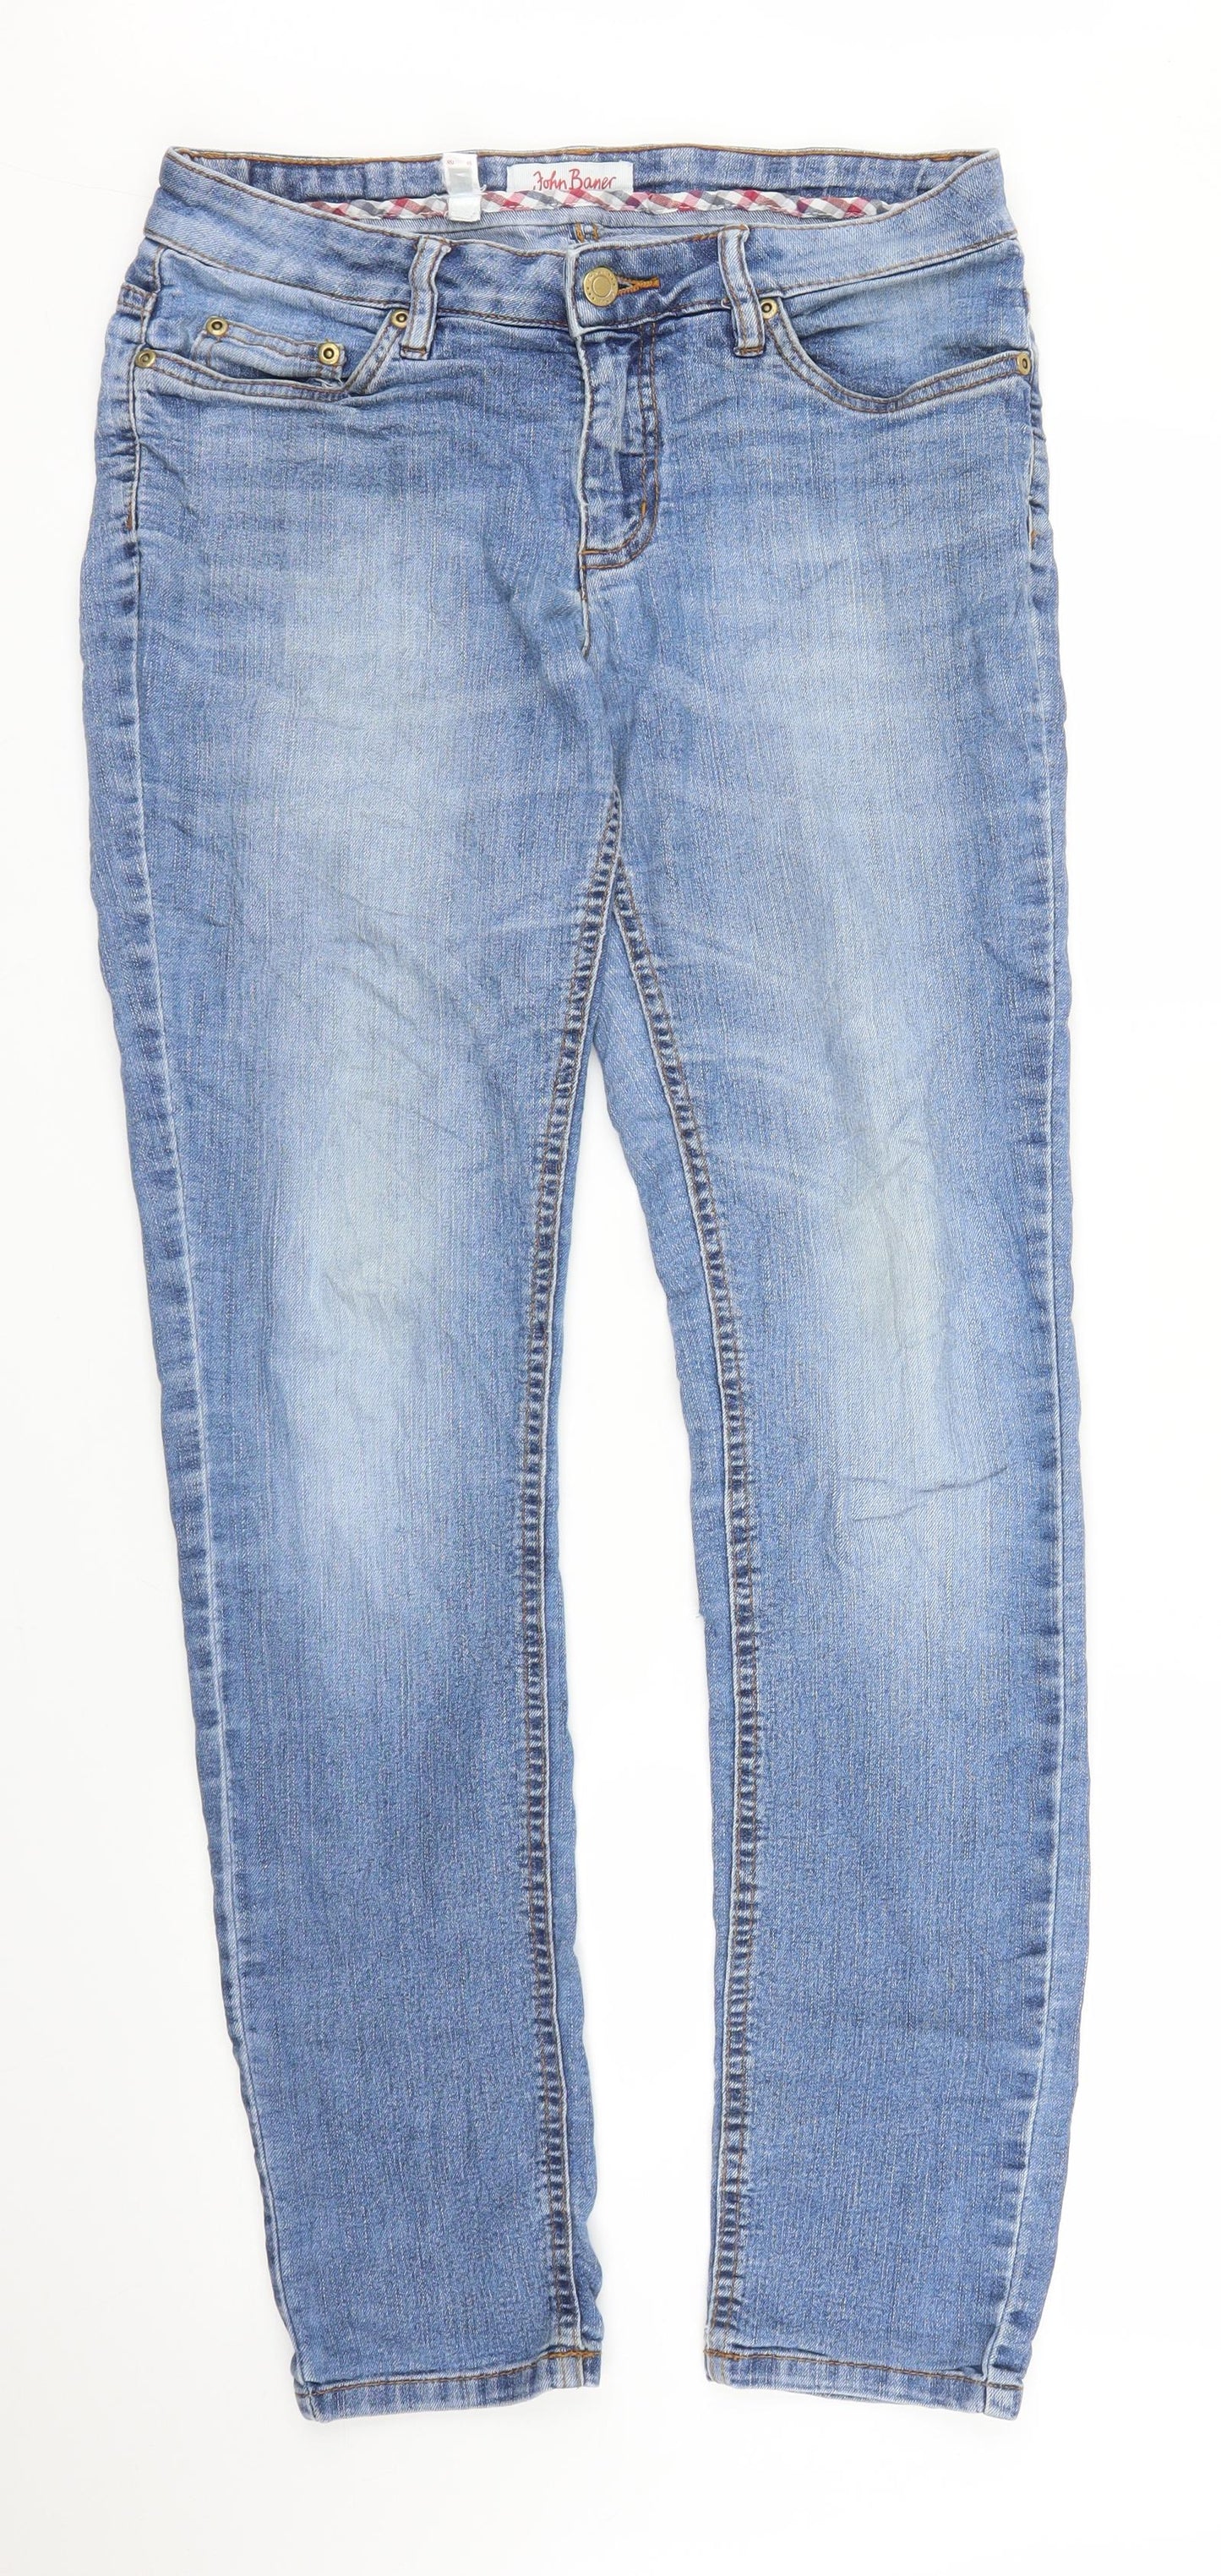 John Baner Womens Blue  Denim Skinny Jeans Size 10 L30 in